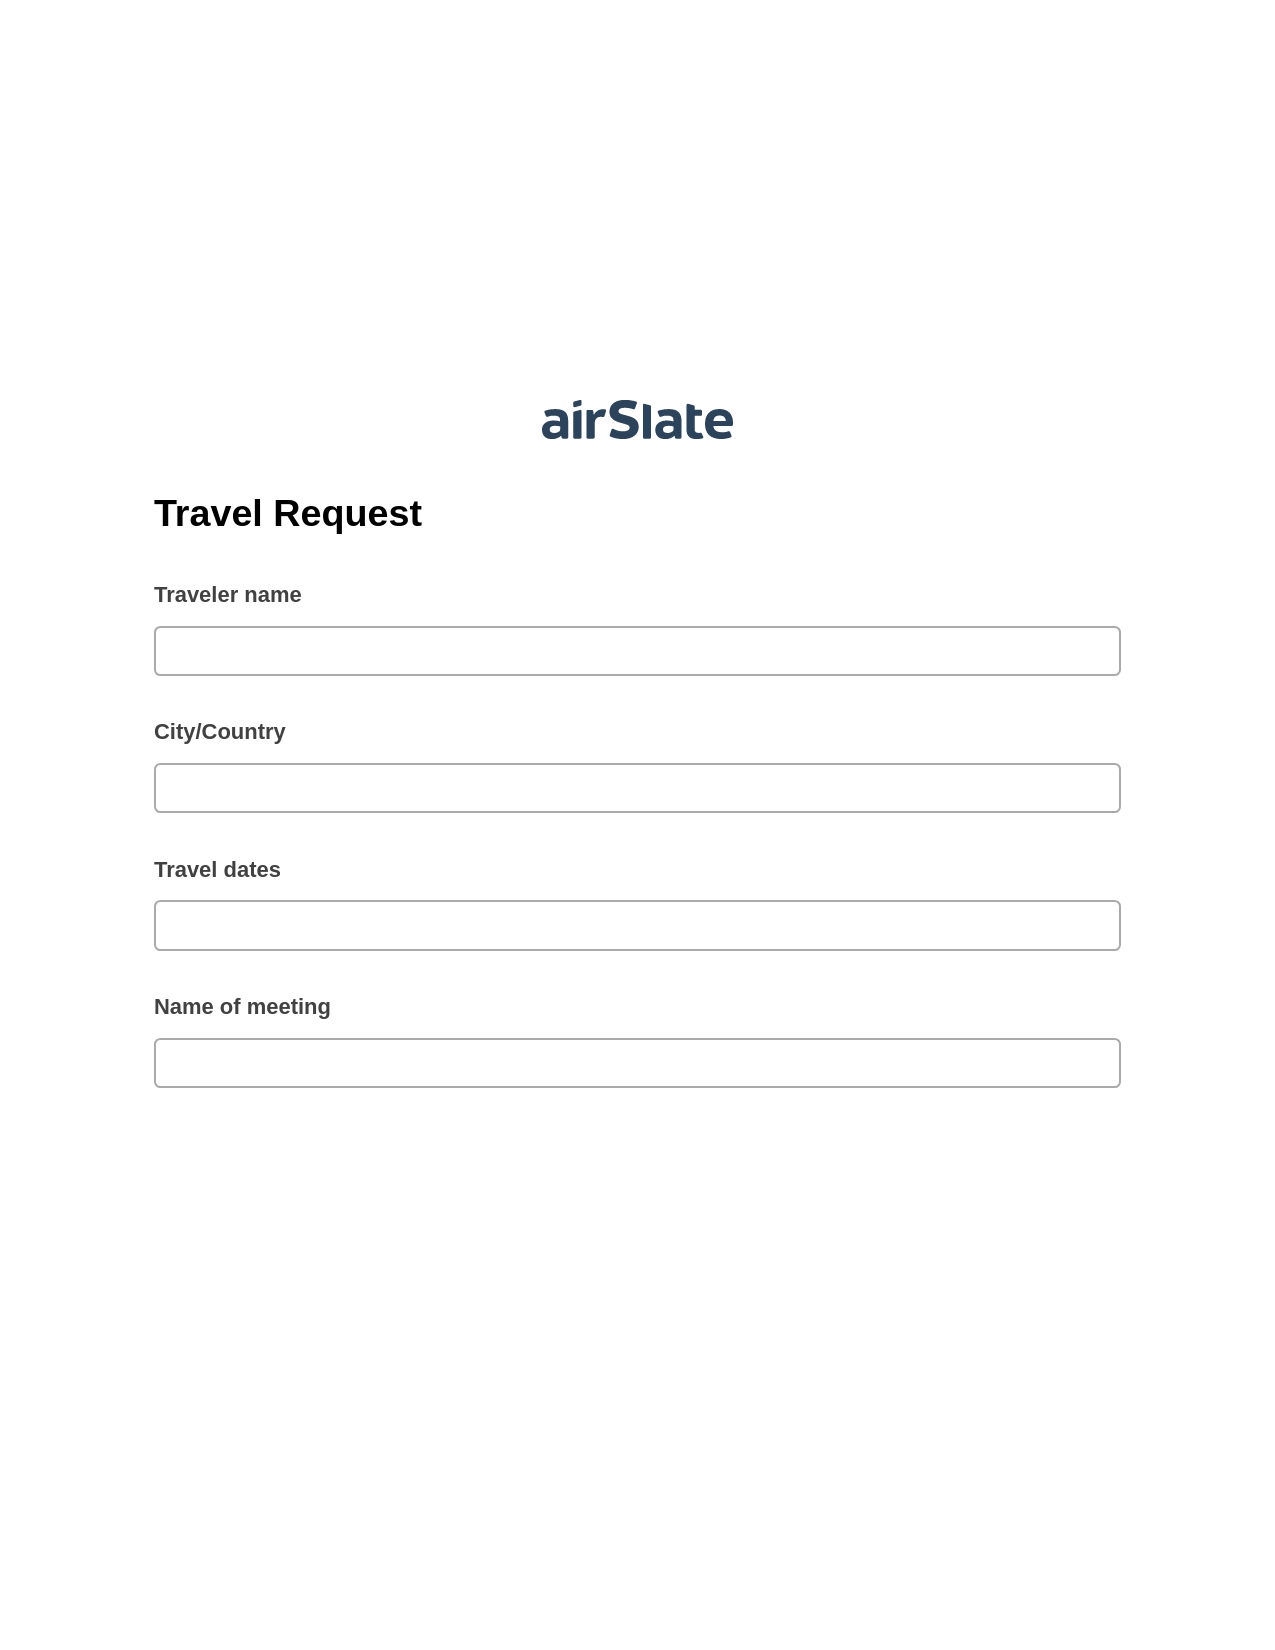 Multirole Travel Request Pre-fill from Salesforce Record Bot, Webhook Bot, Slack Notification Postfinish Bot